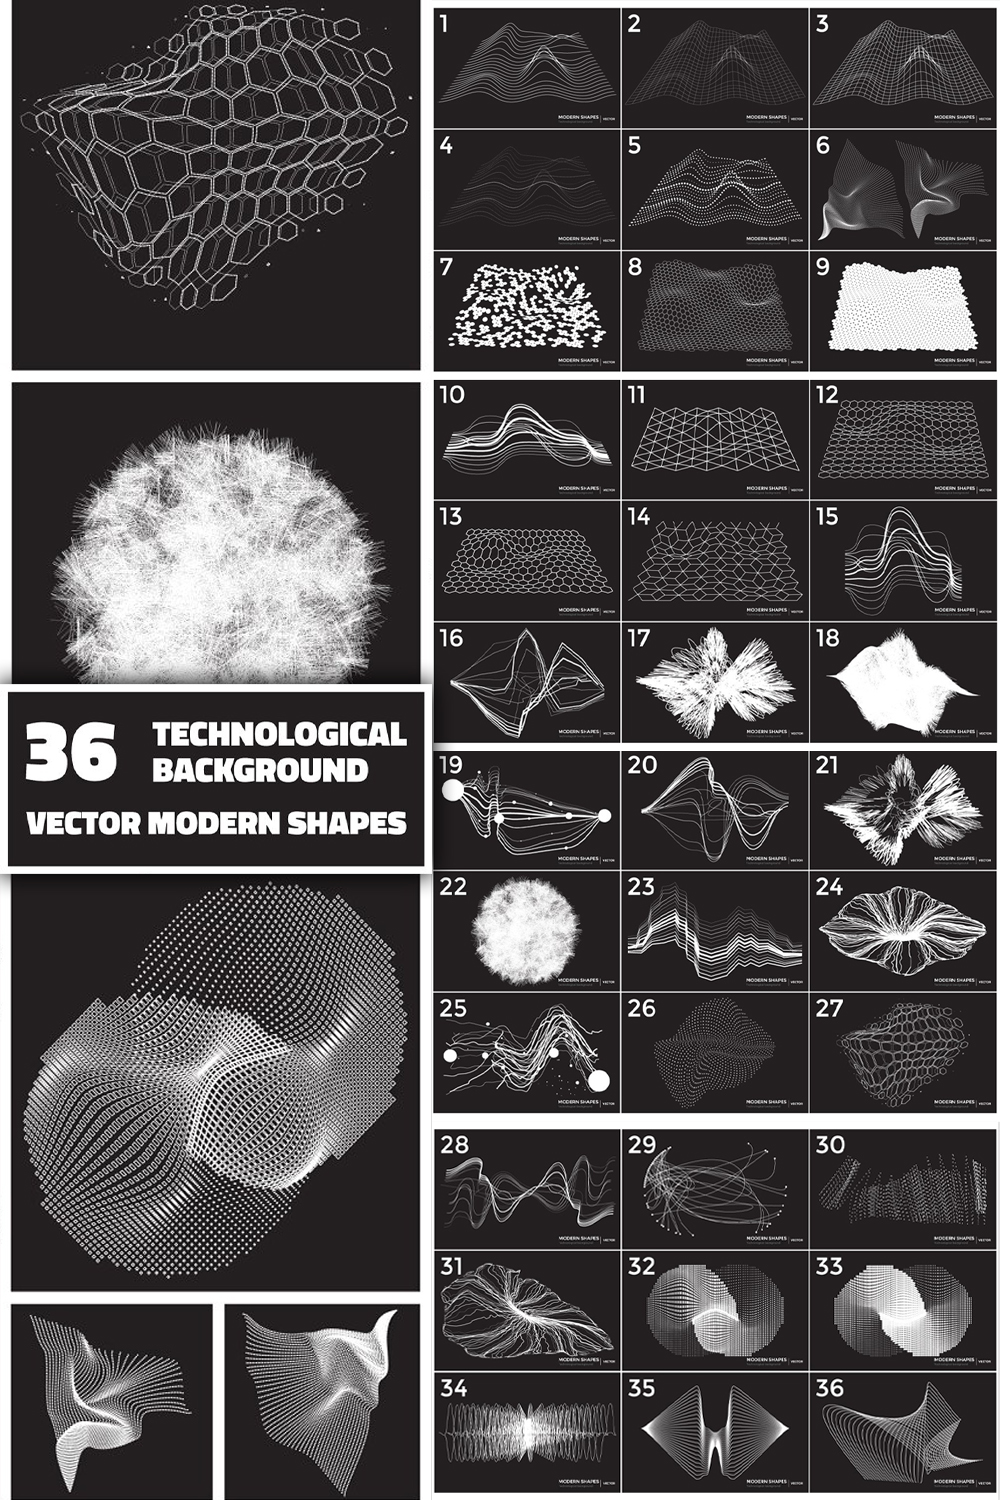 36 technological shapes of pinterest.